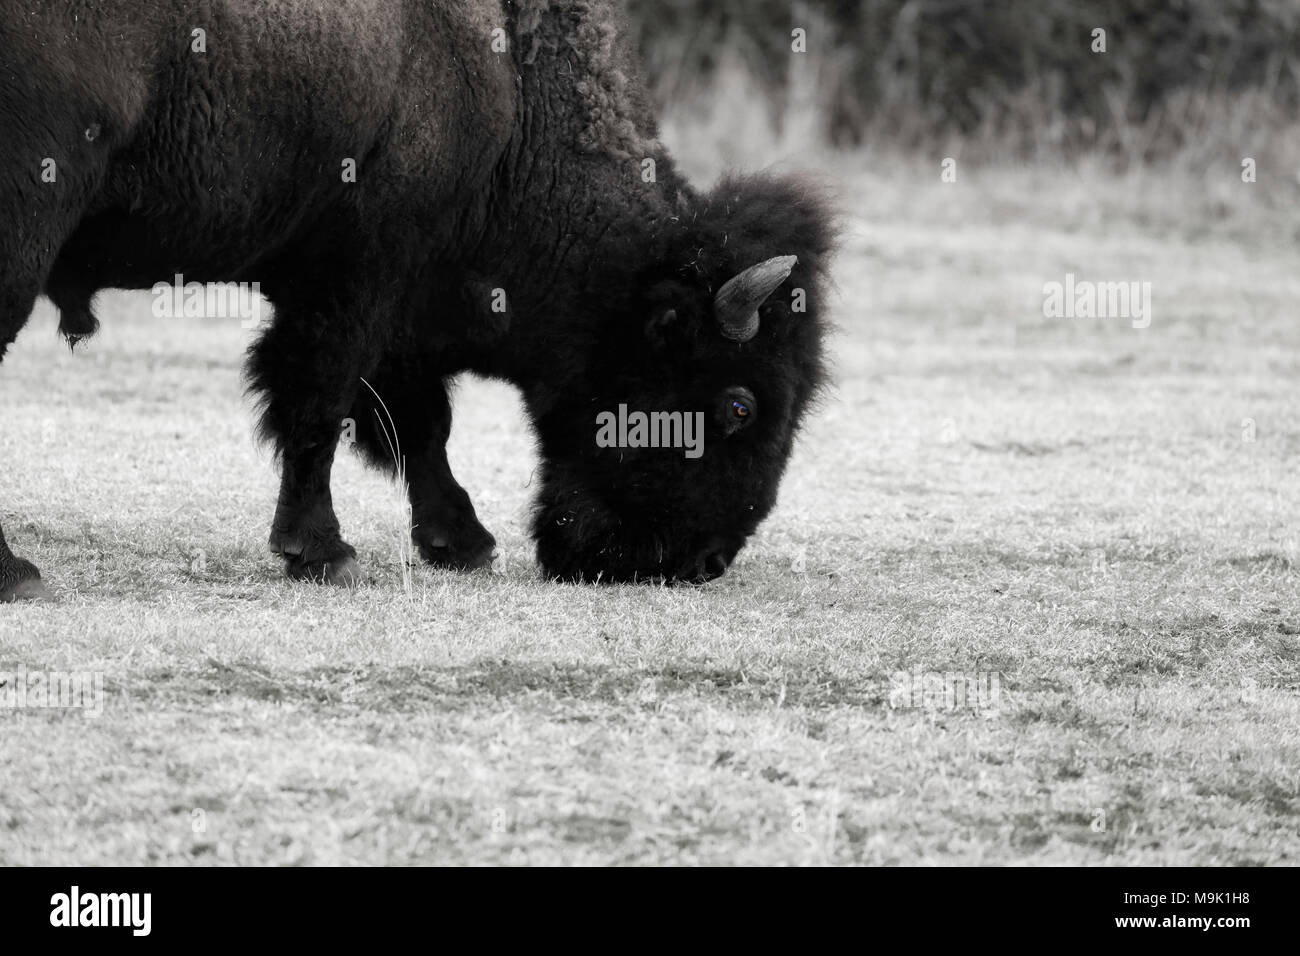 Black and White Buffalo Stock Photo